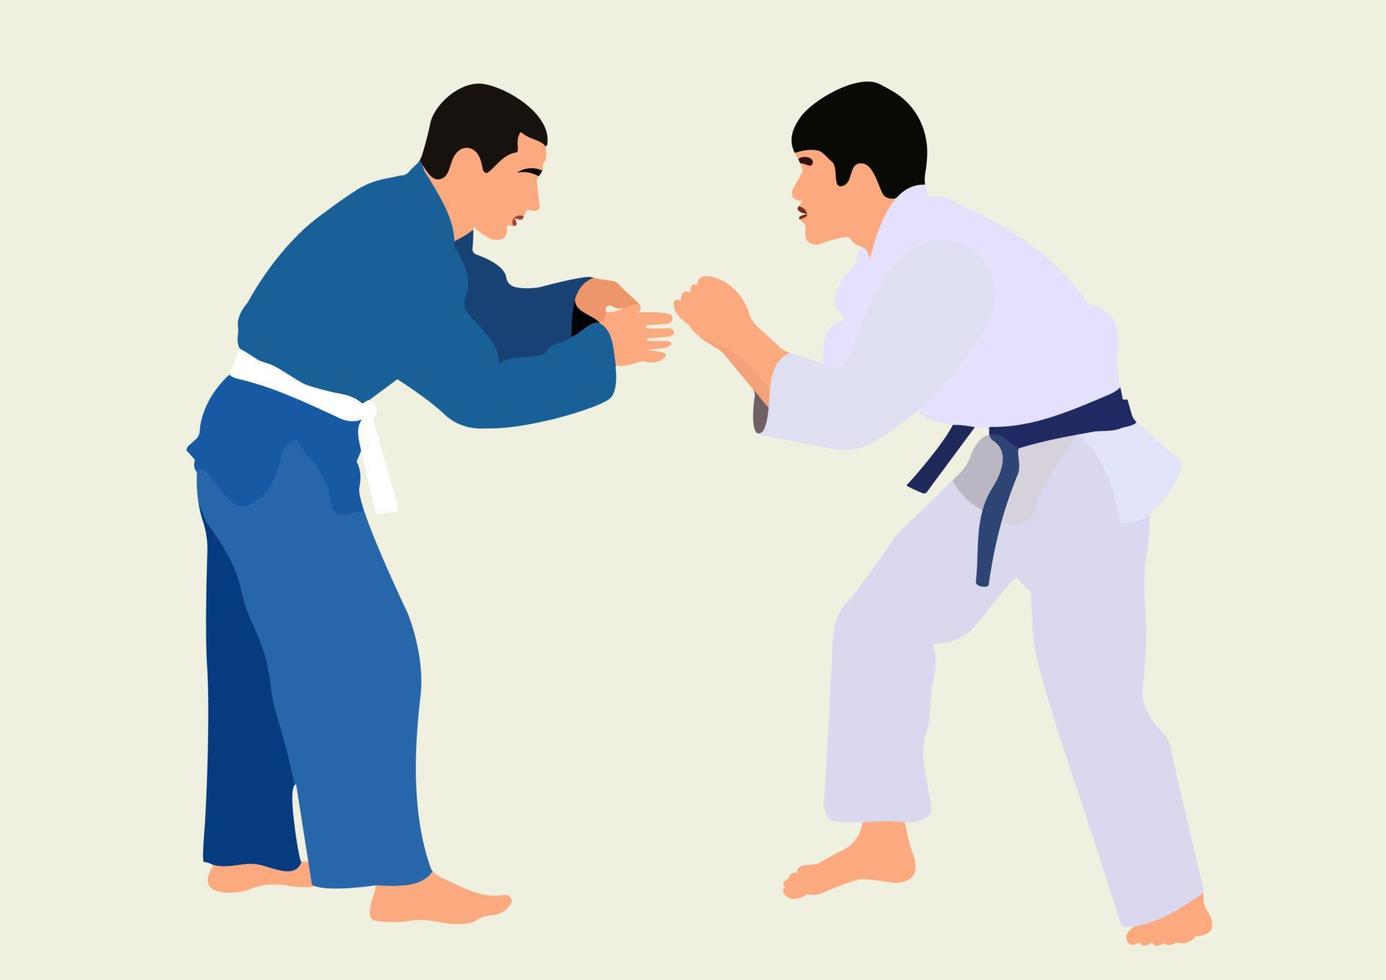 atleta judoista en duelo, lucha. deporte de judo, arte marcial. estilo plano isométrico. vector